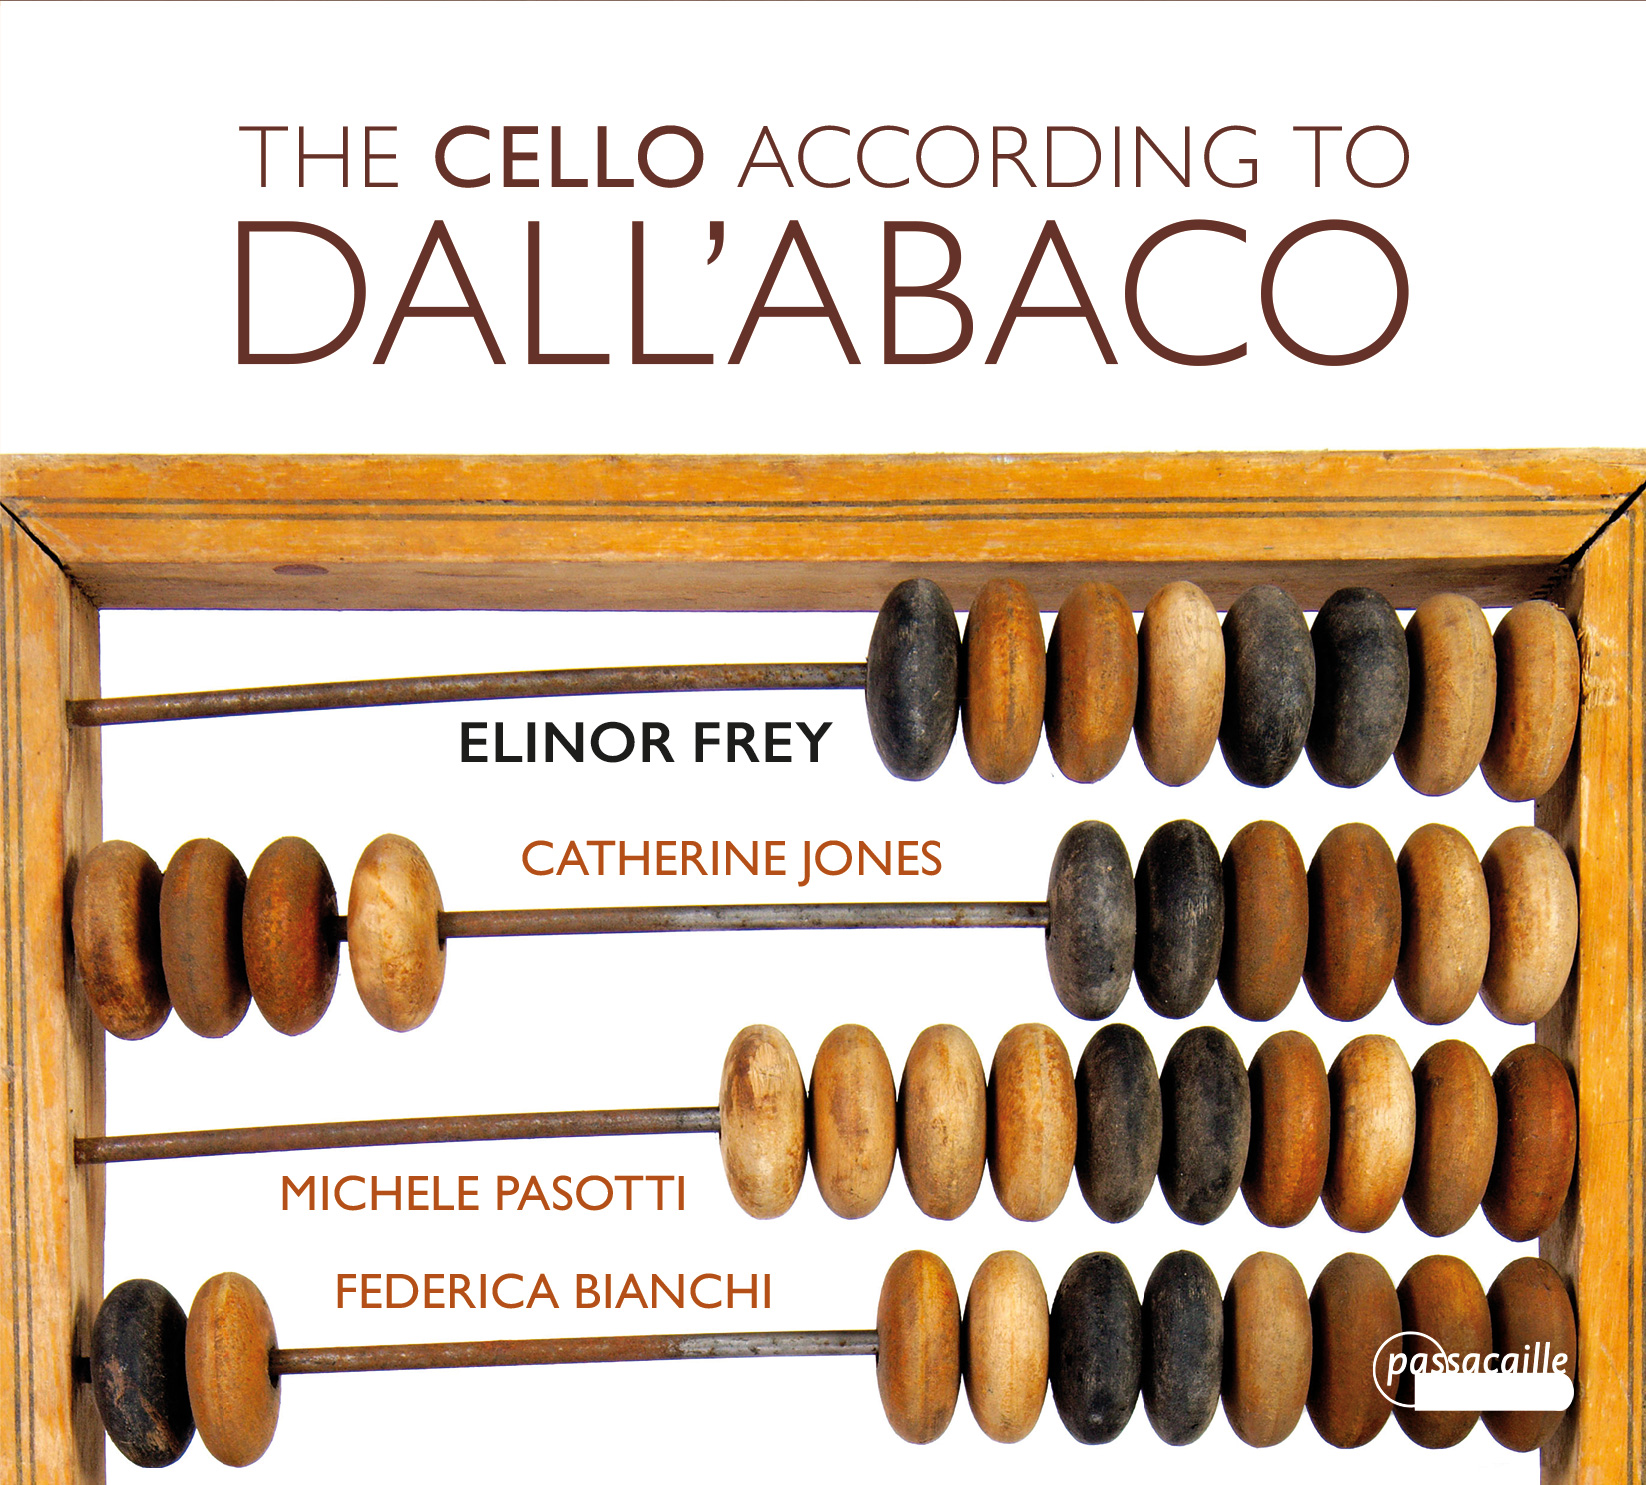 The Cello According to Dall'Abaco